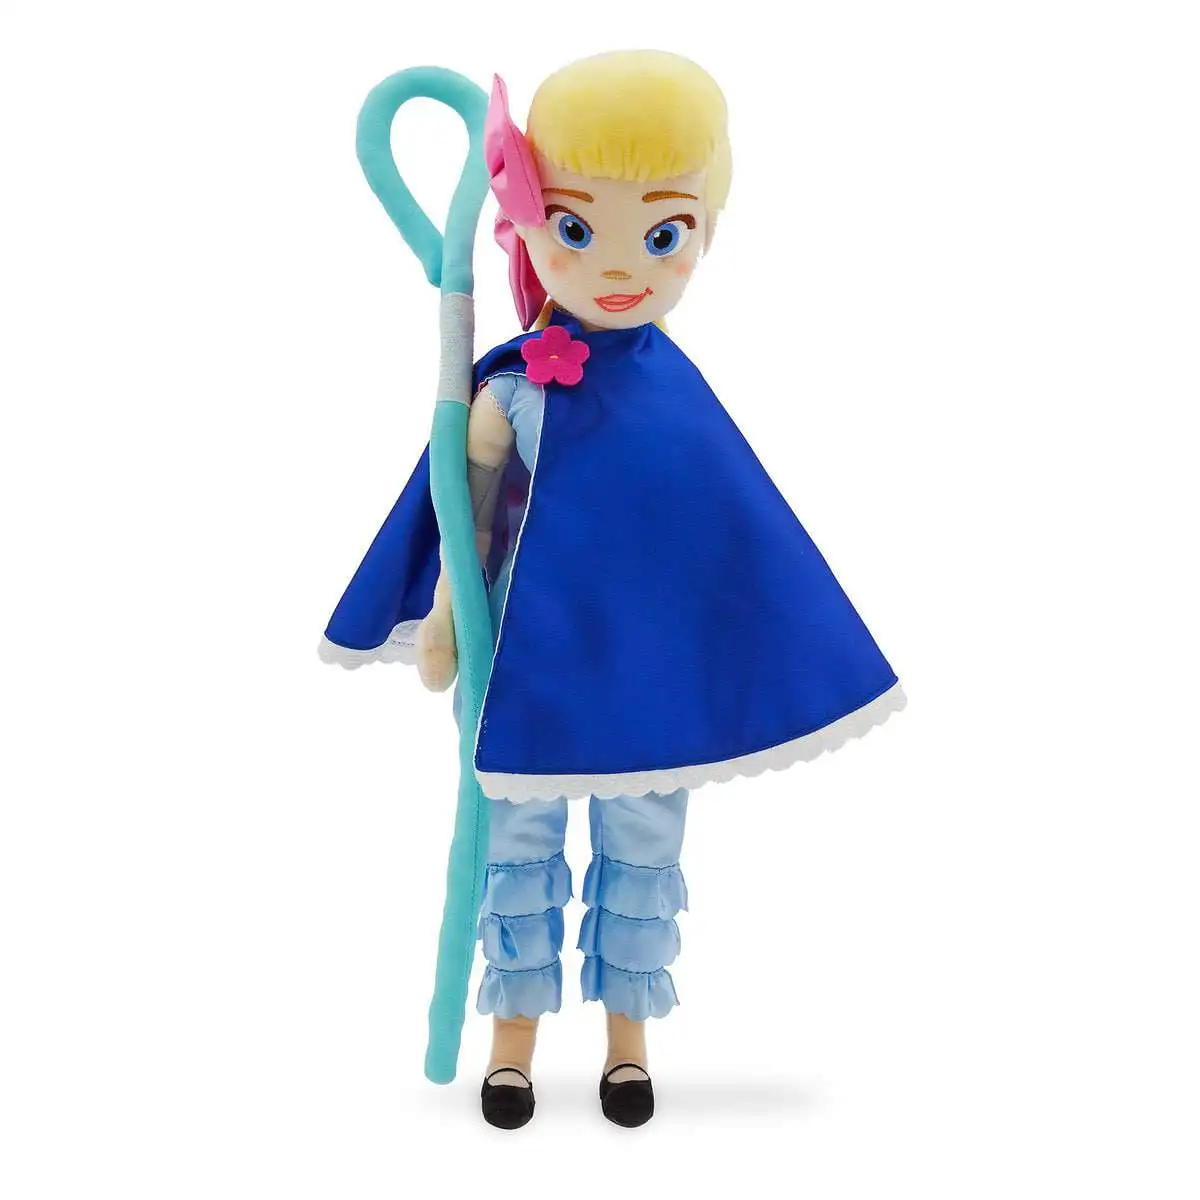 Little Bo PEEP Plush Doll Medium 18 1/2 Inch Toy Story 4 Disney Authentic for sale online 